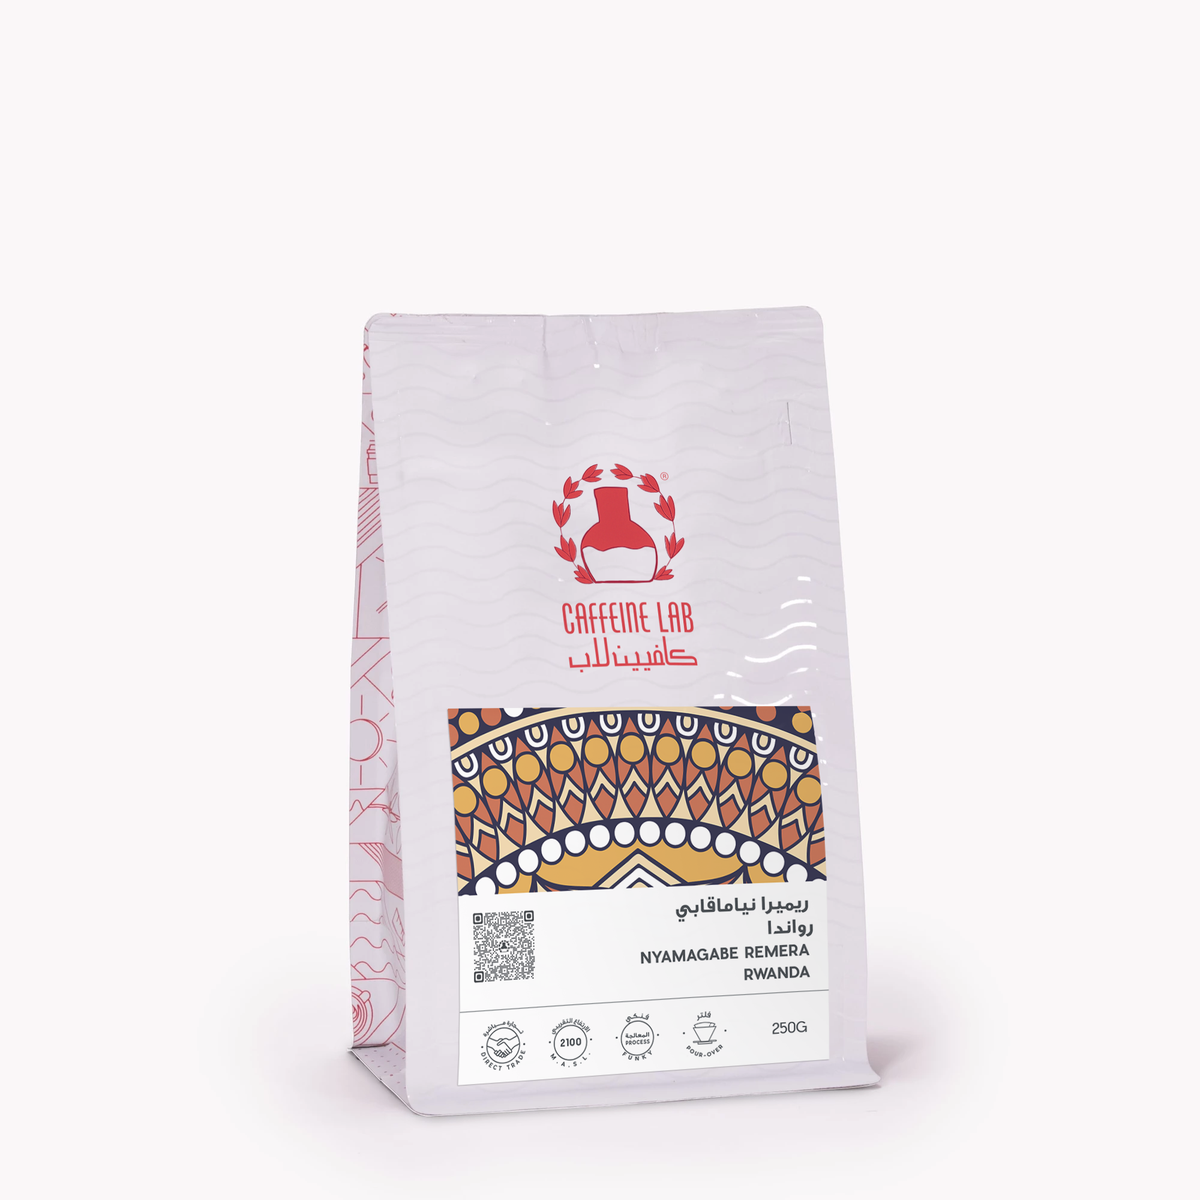 Nyamagabe Remara Rawanda - Filter Coffee